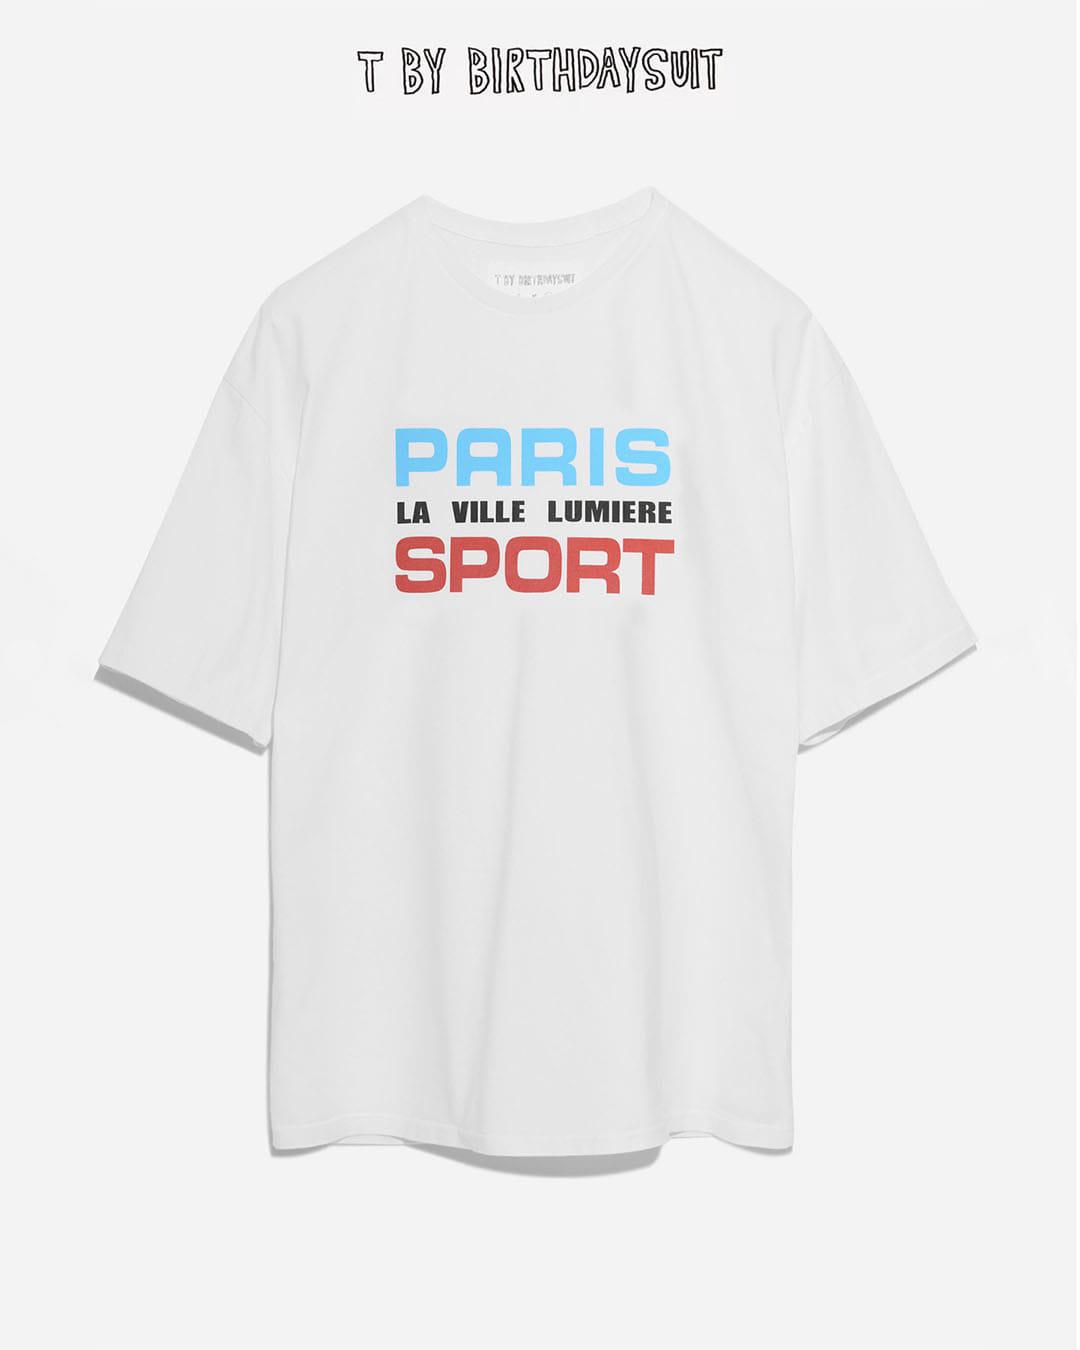 PARIS SPORT T-SHIRT (WHITE - BLUE)